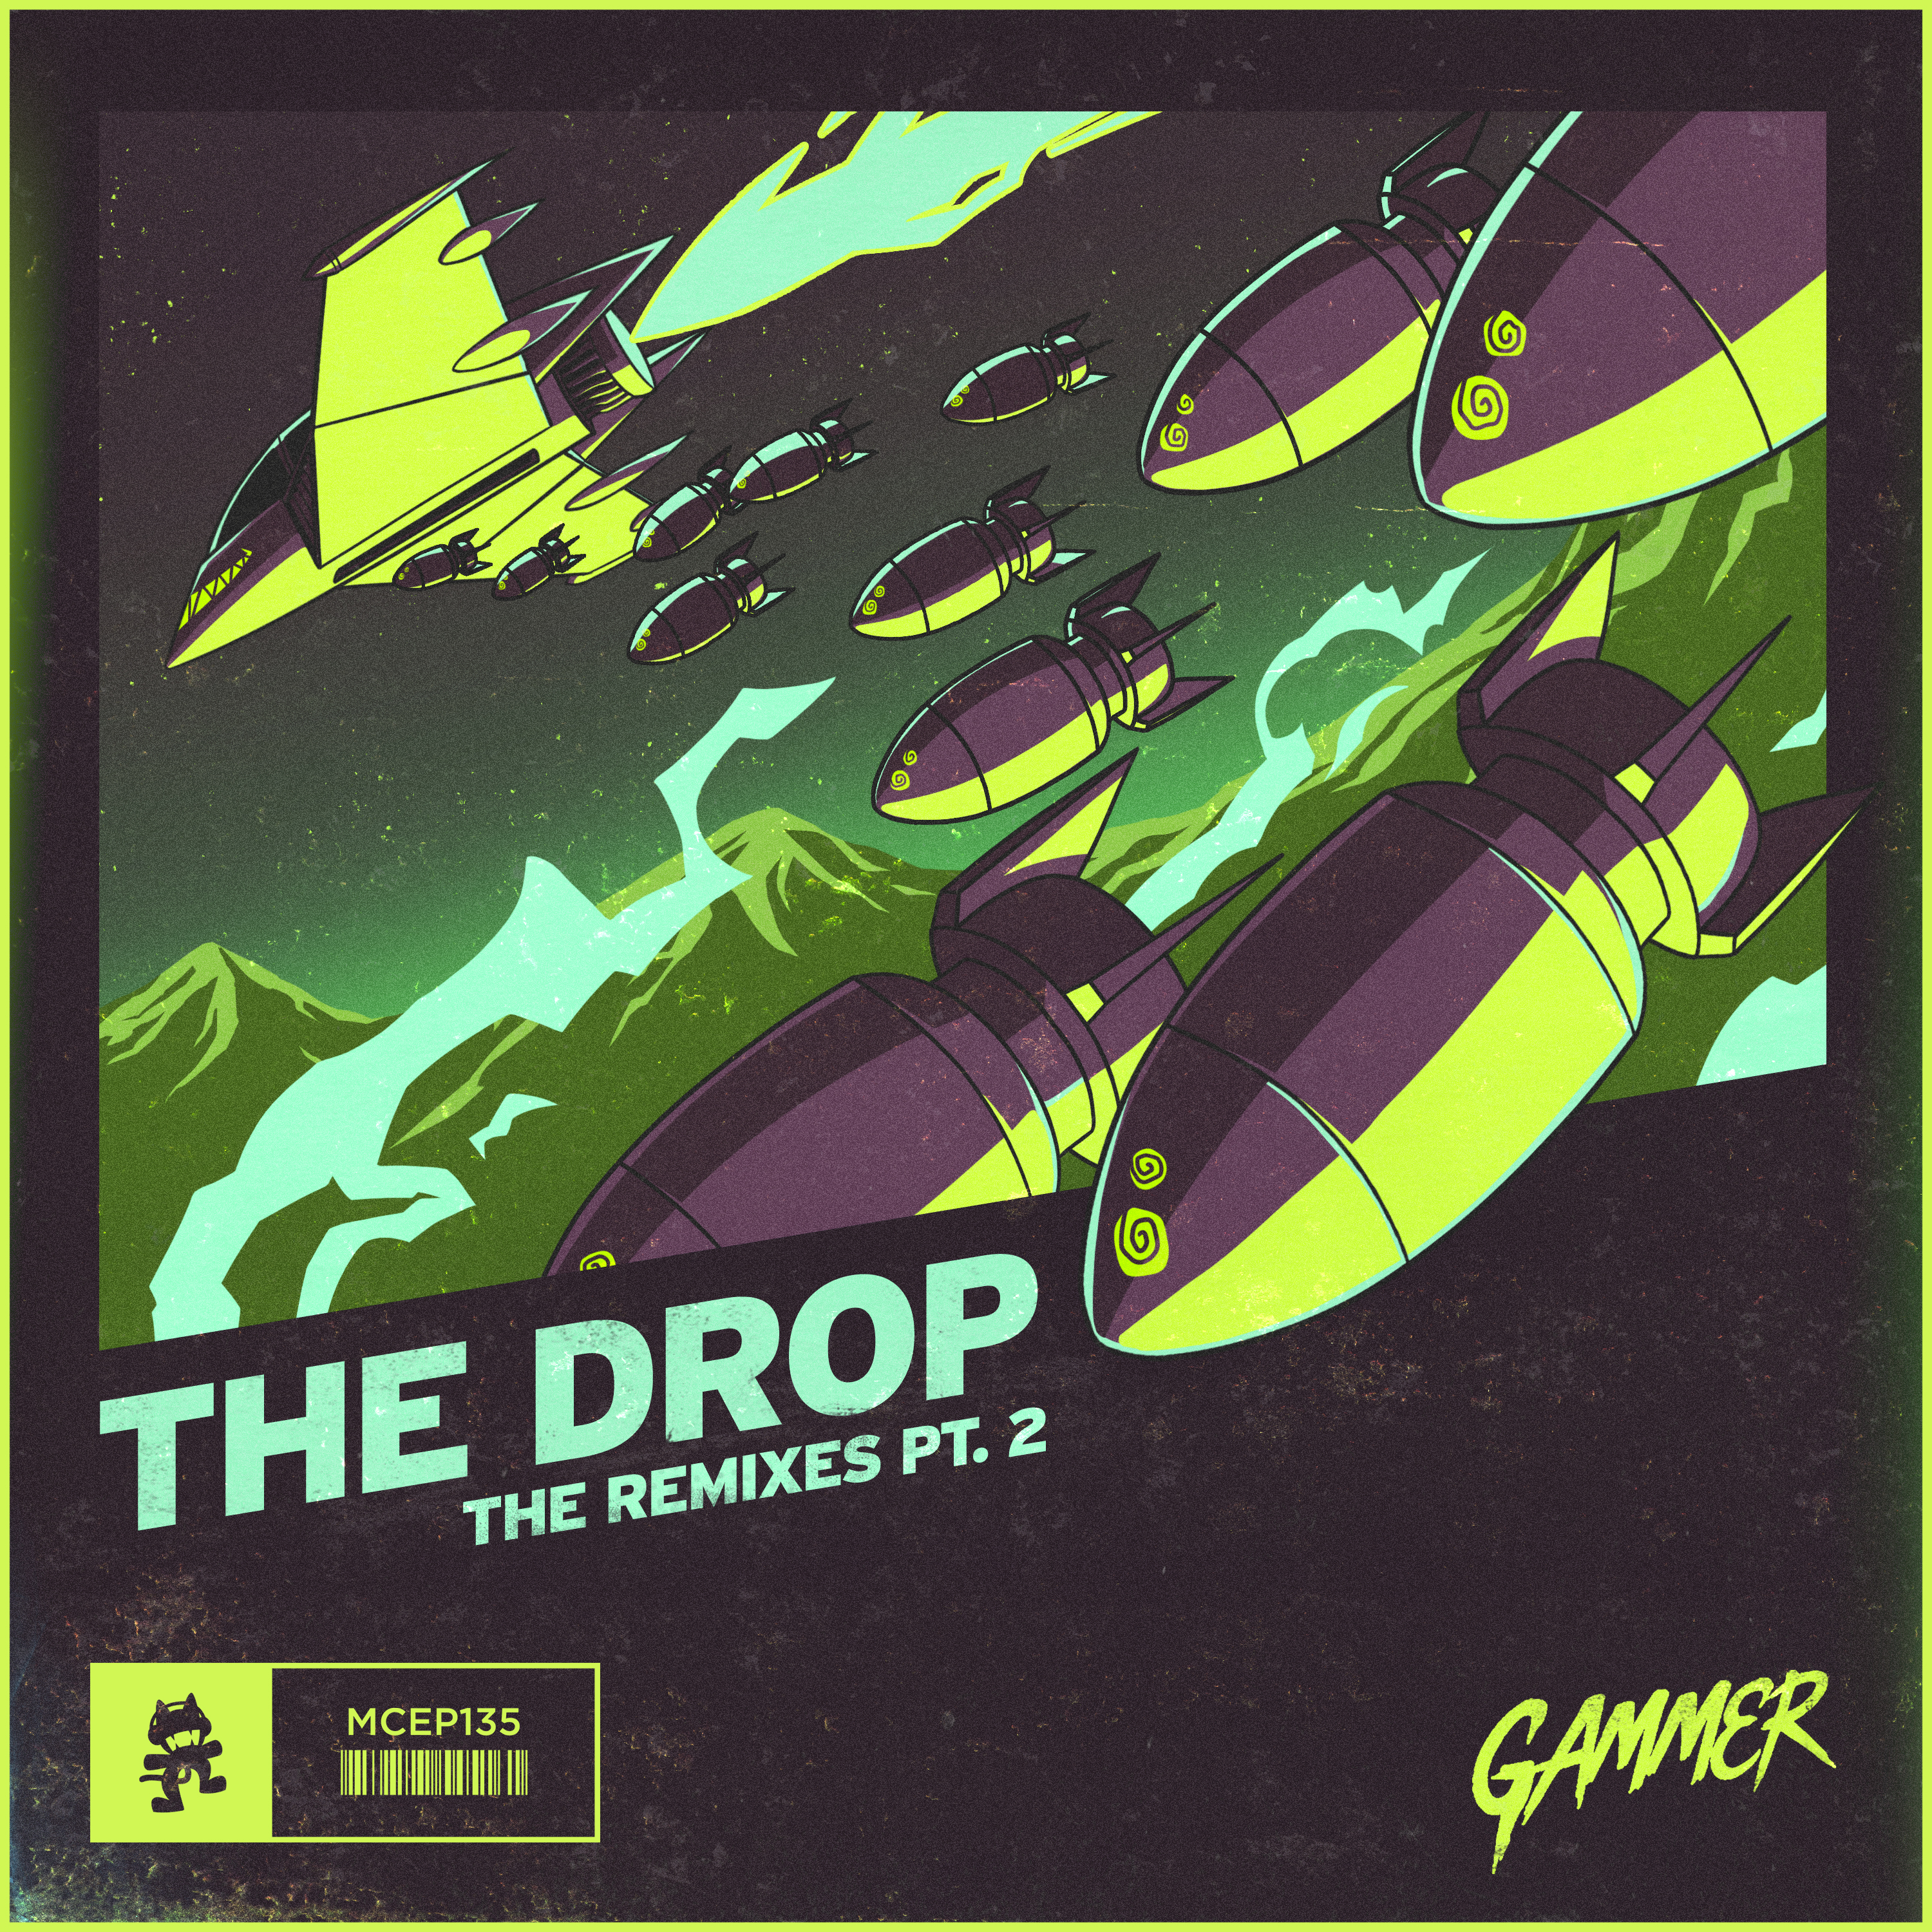 THE DROP (Remixes Pt. 2)